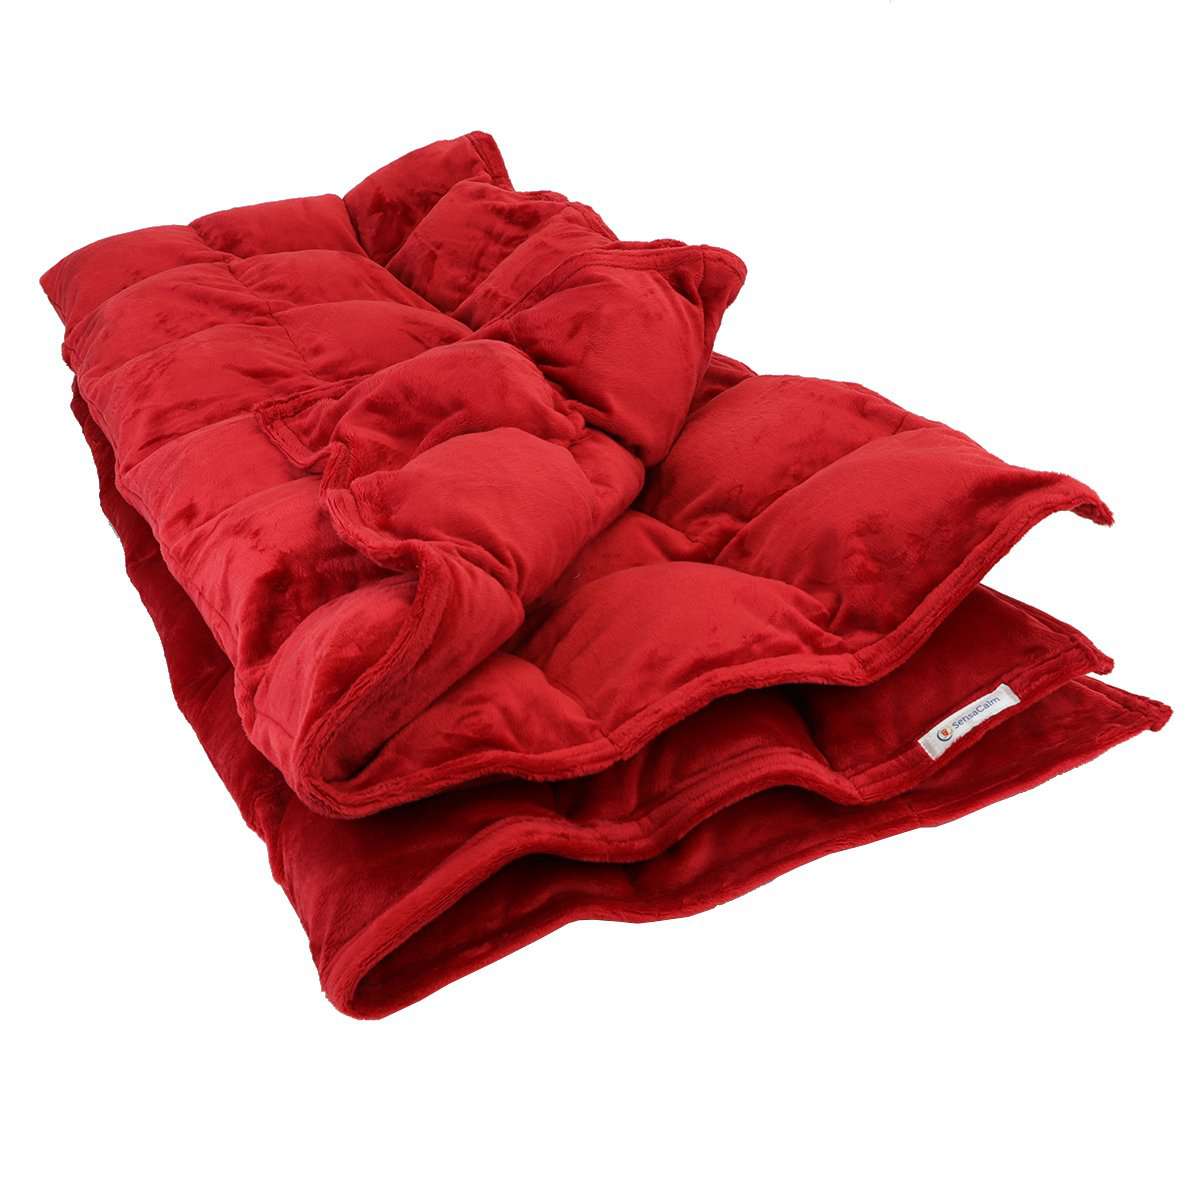 SensaCalm Cuddle Weighted Blanket - Red Custom Weighted Blanket